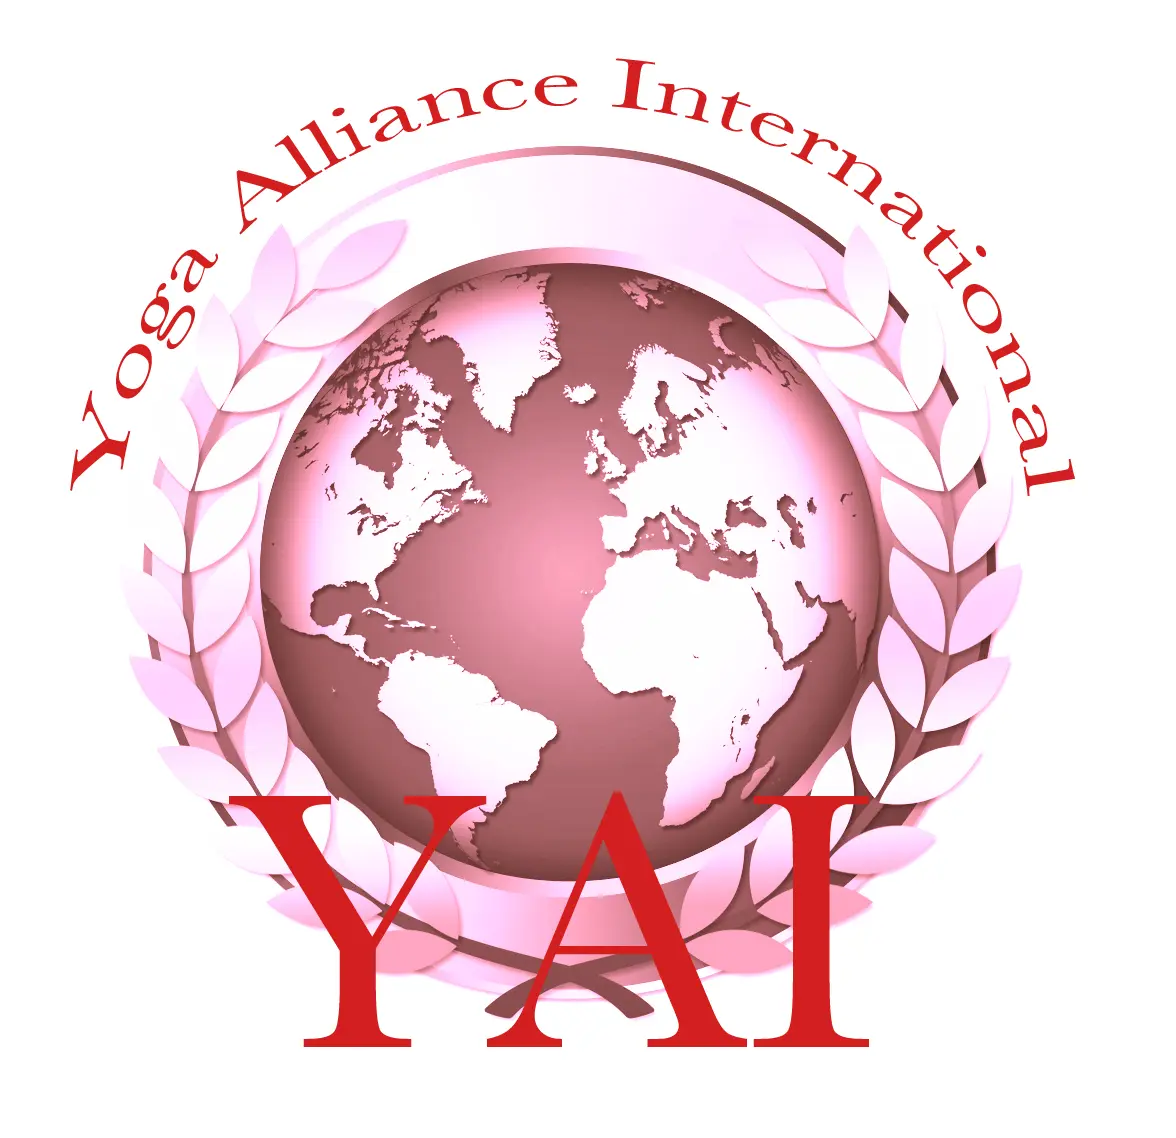 yoga alliance international logo - Is Yoga Alliance global